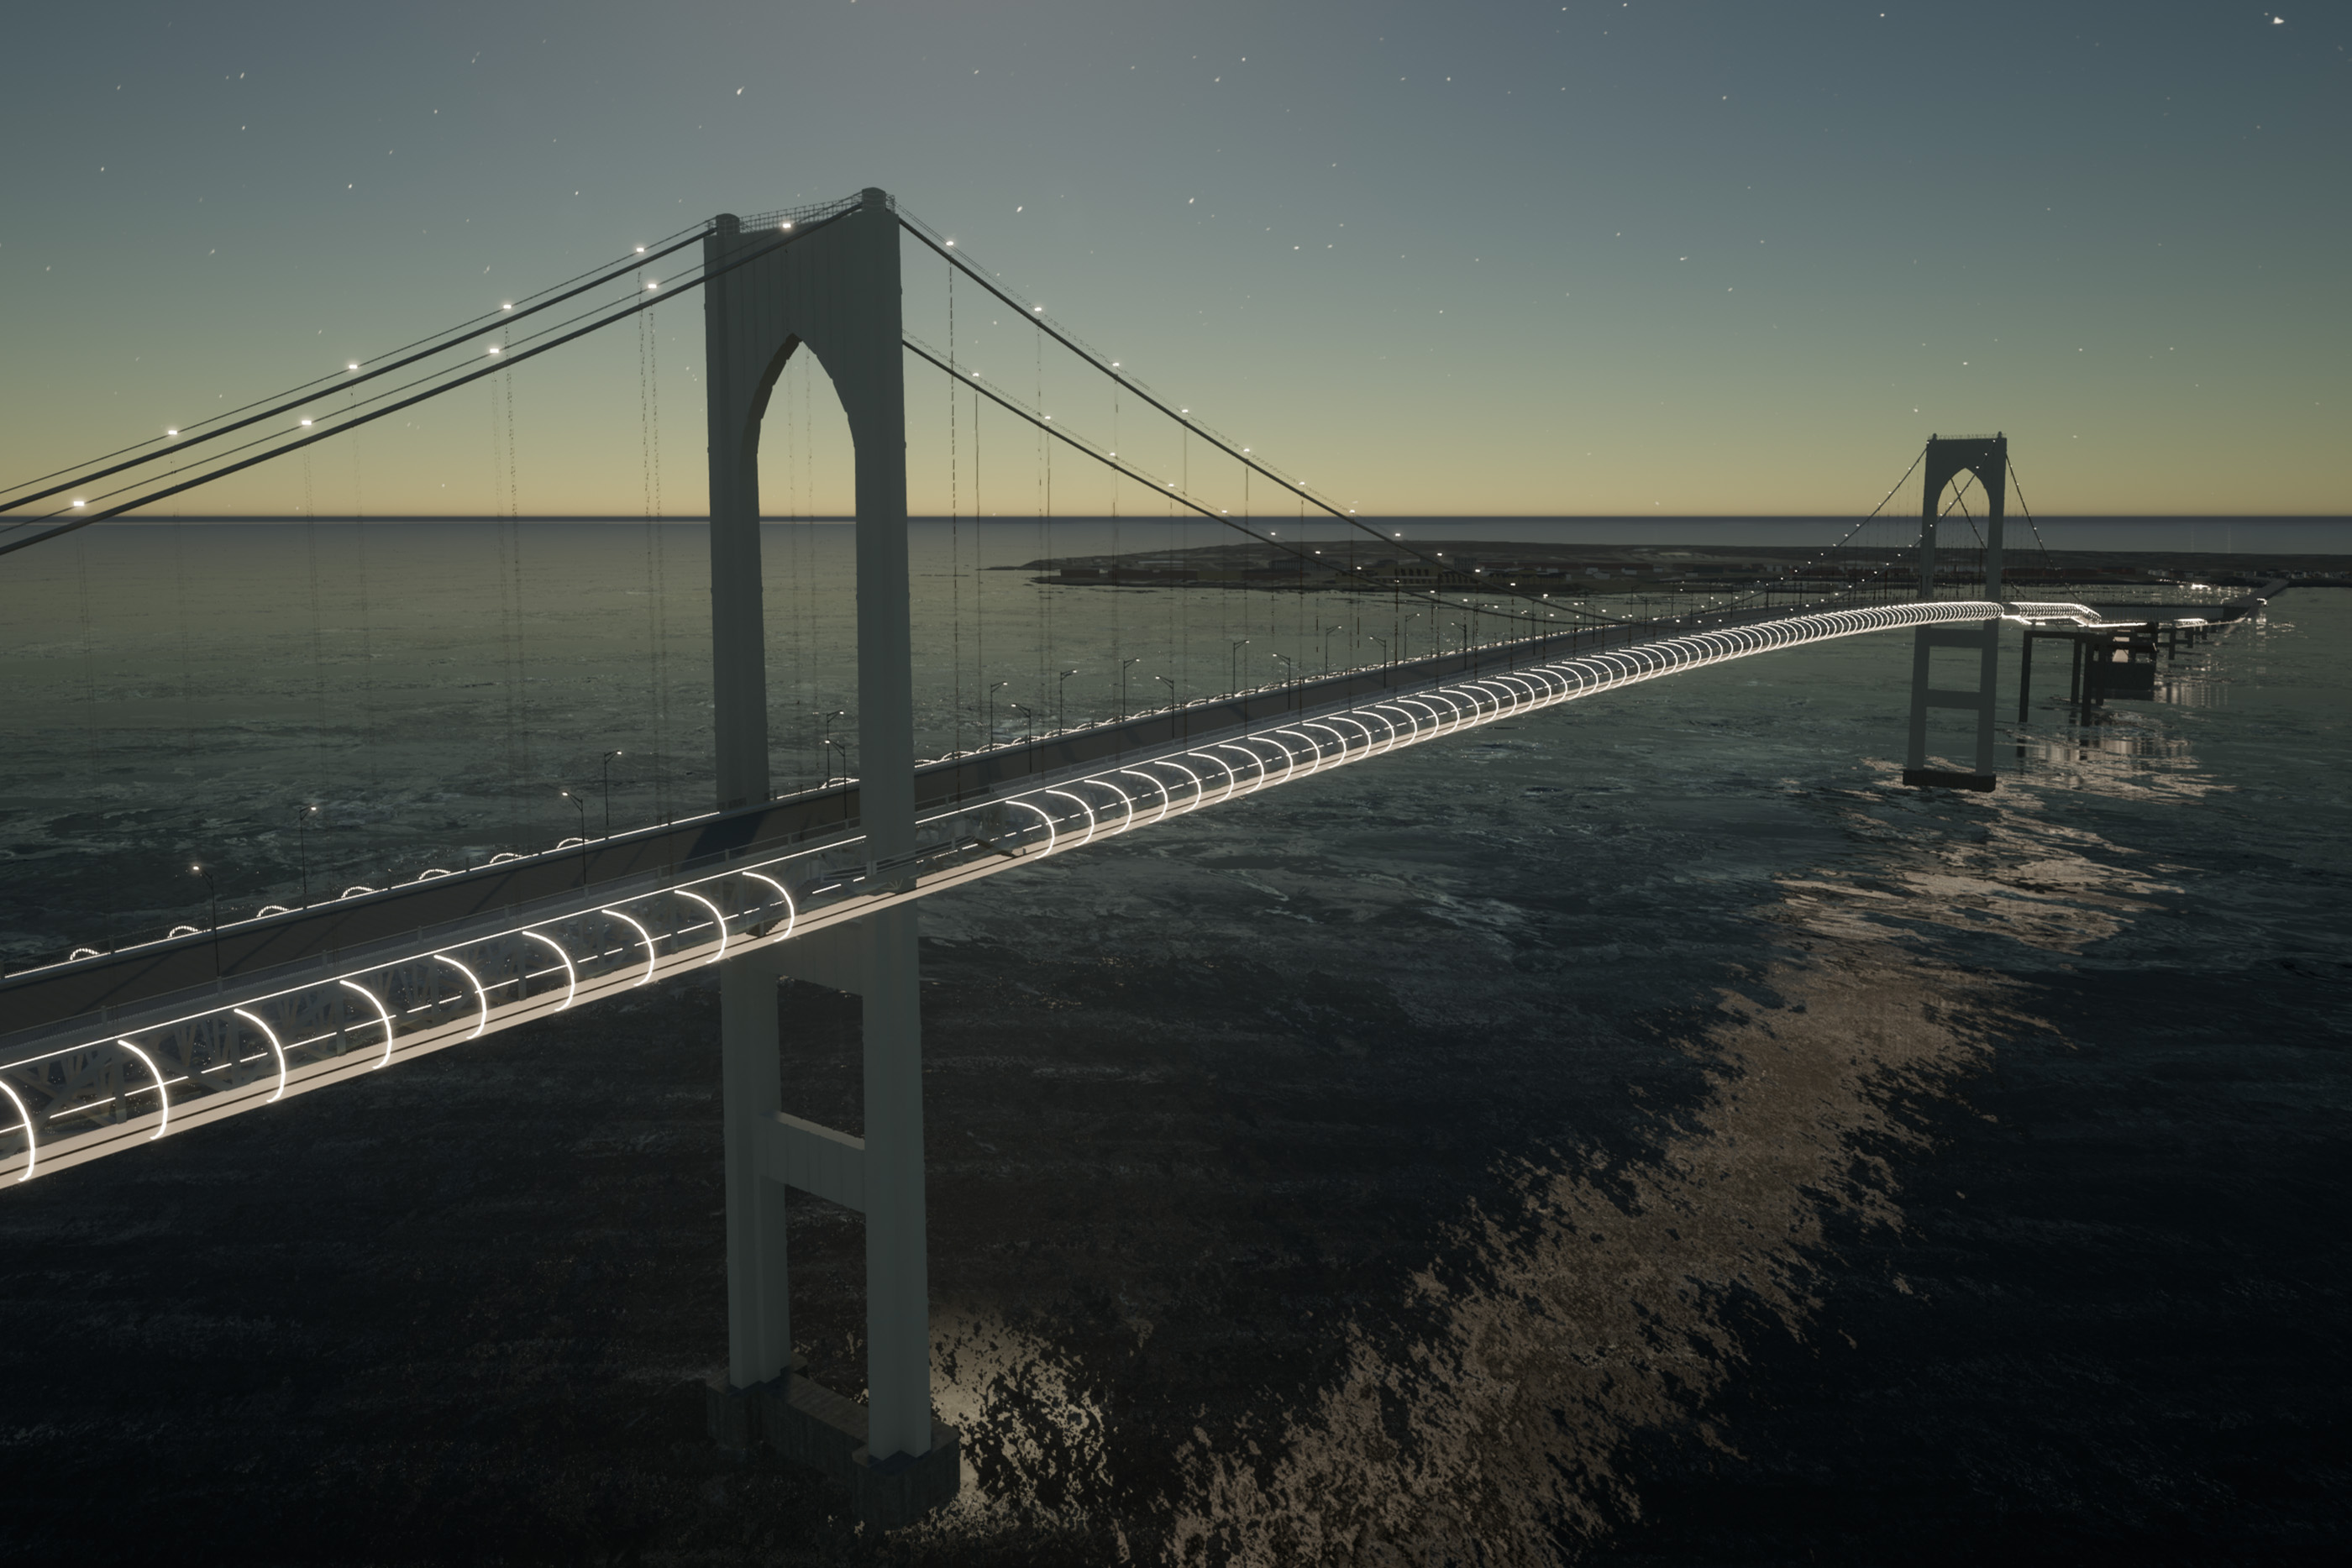 rendering showing bridge as power conduit